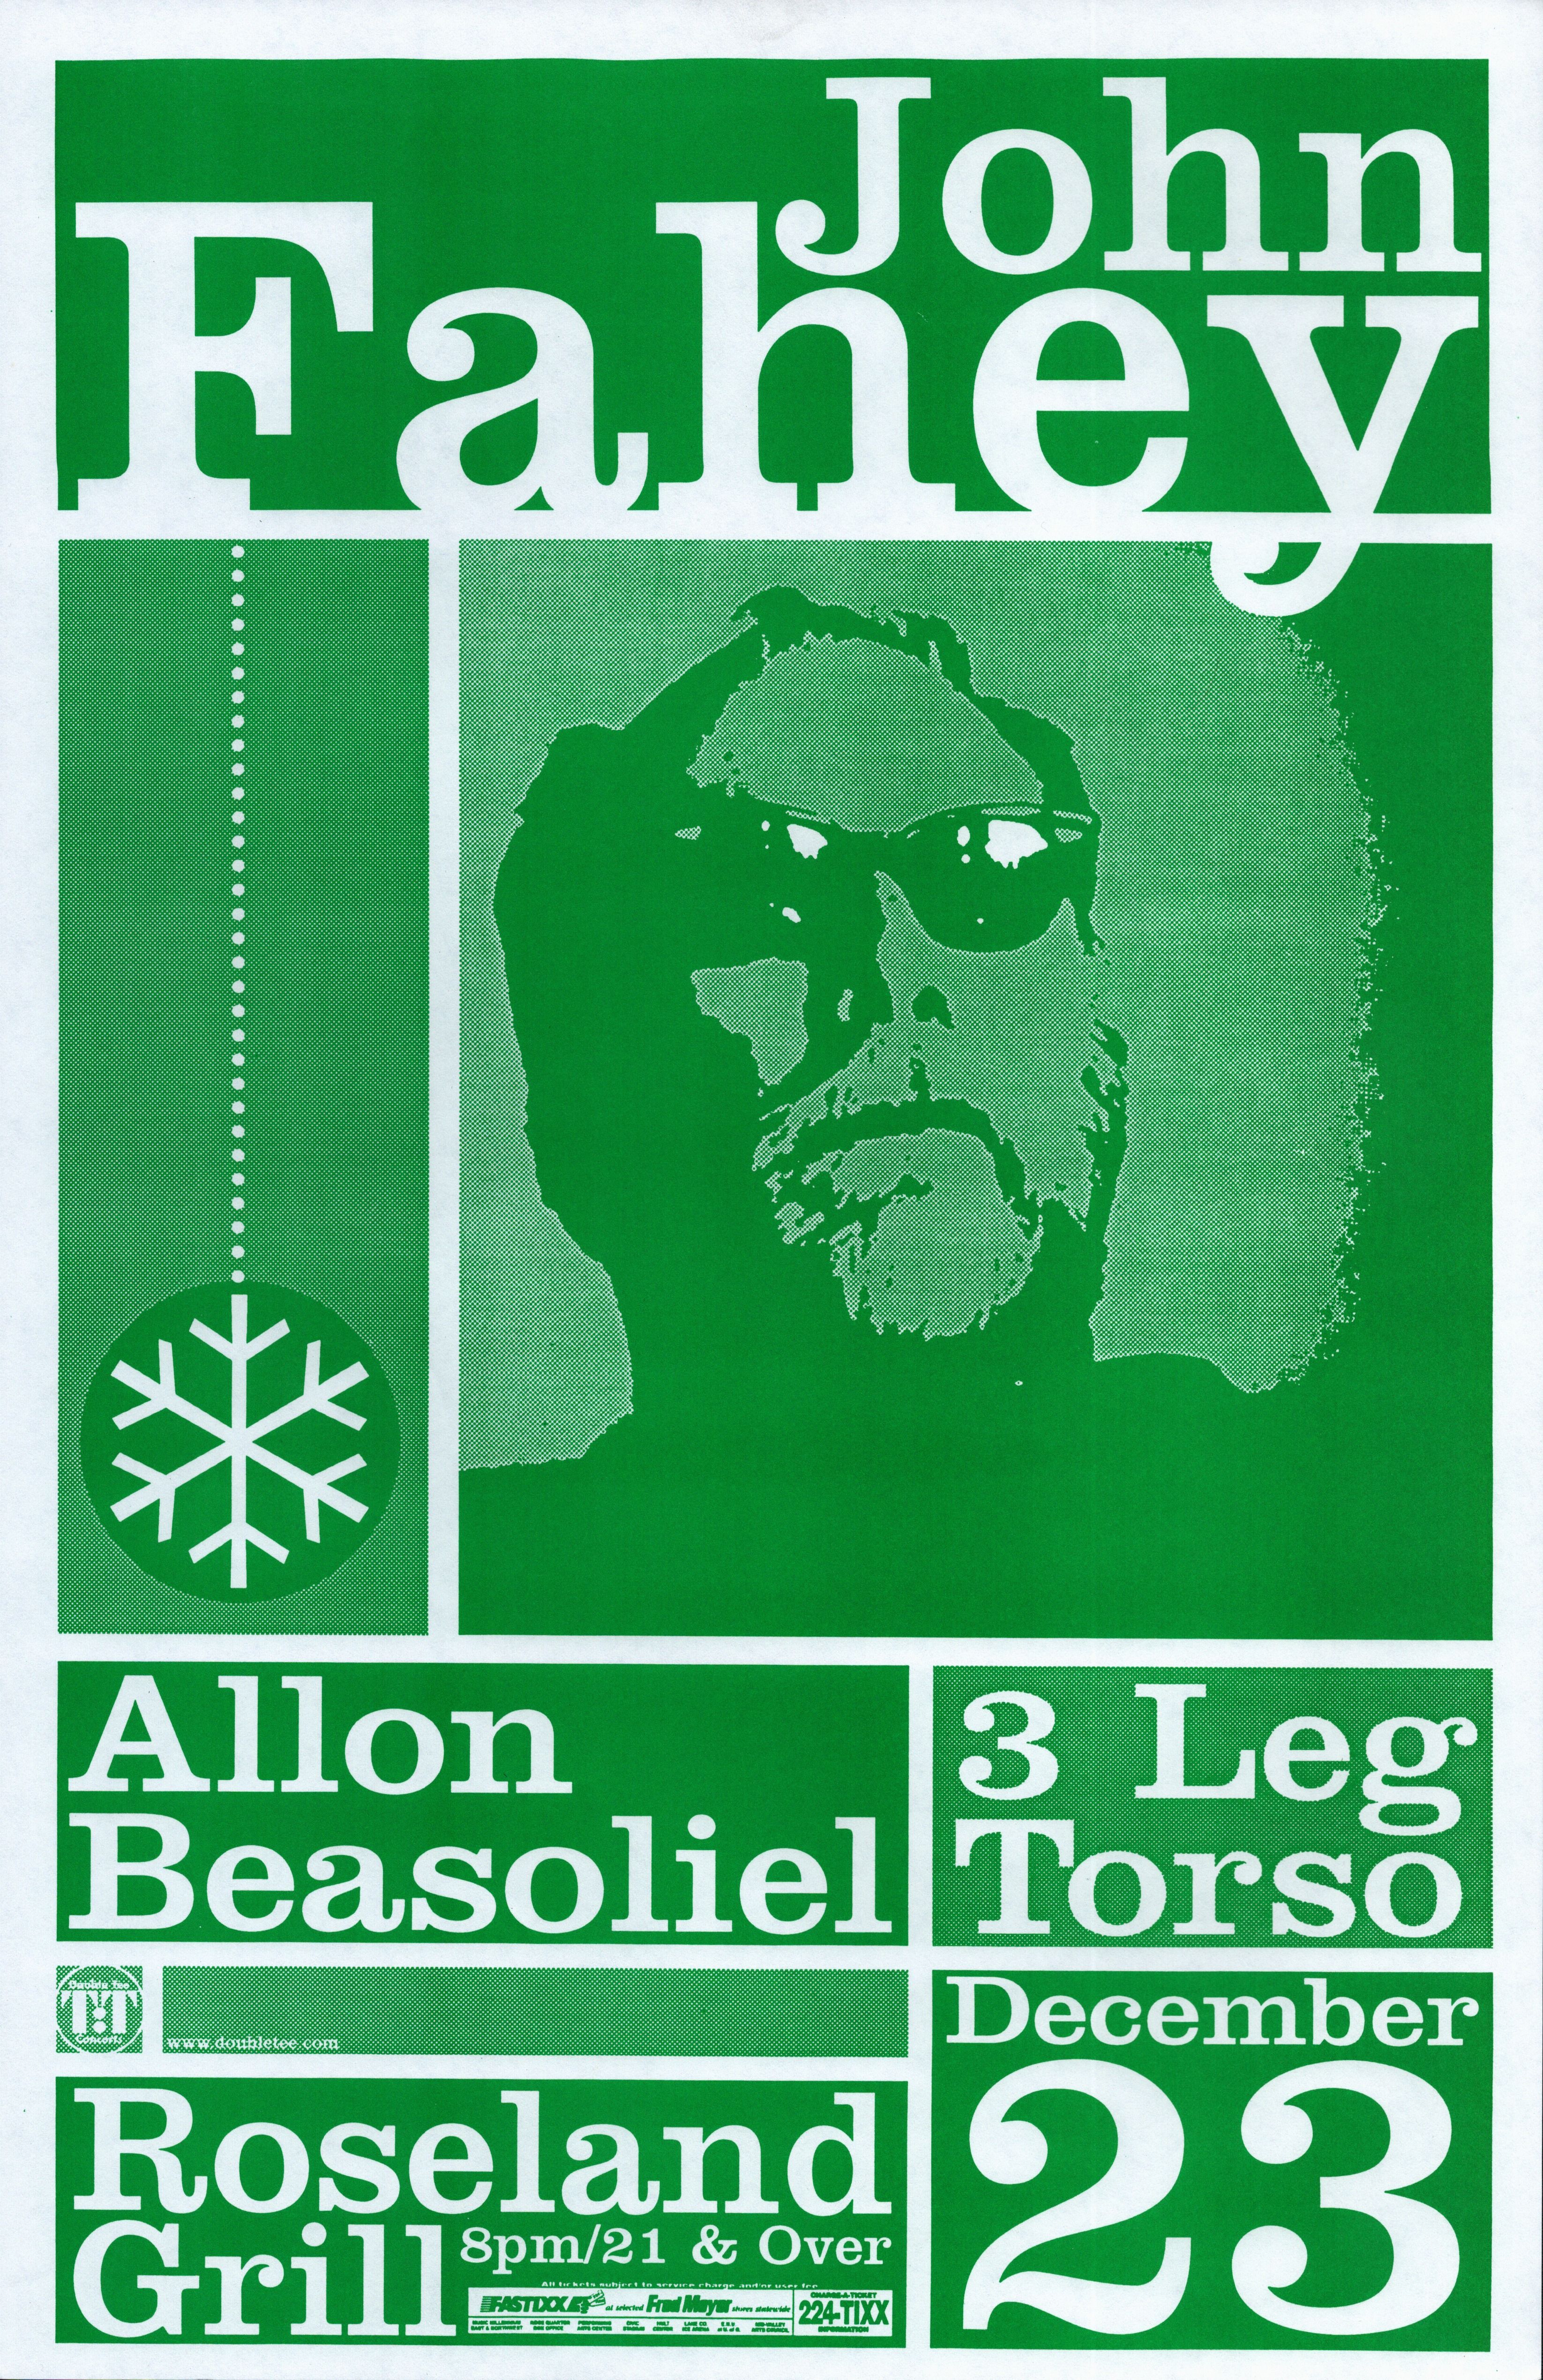 MXP-257.4 John Fahey Roseland Theater 1999 Concert Poster